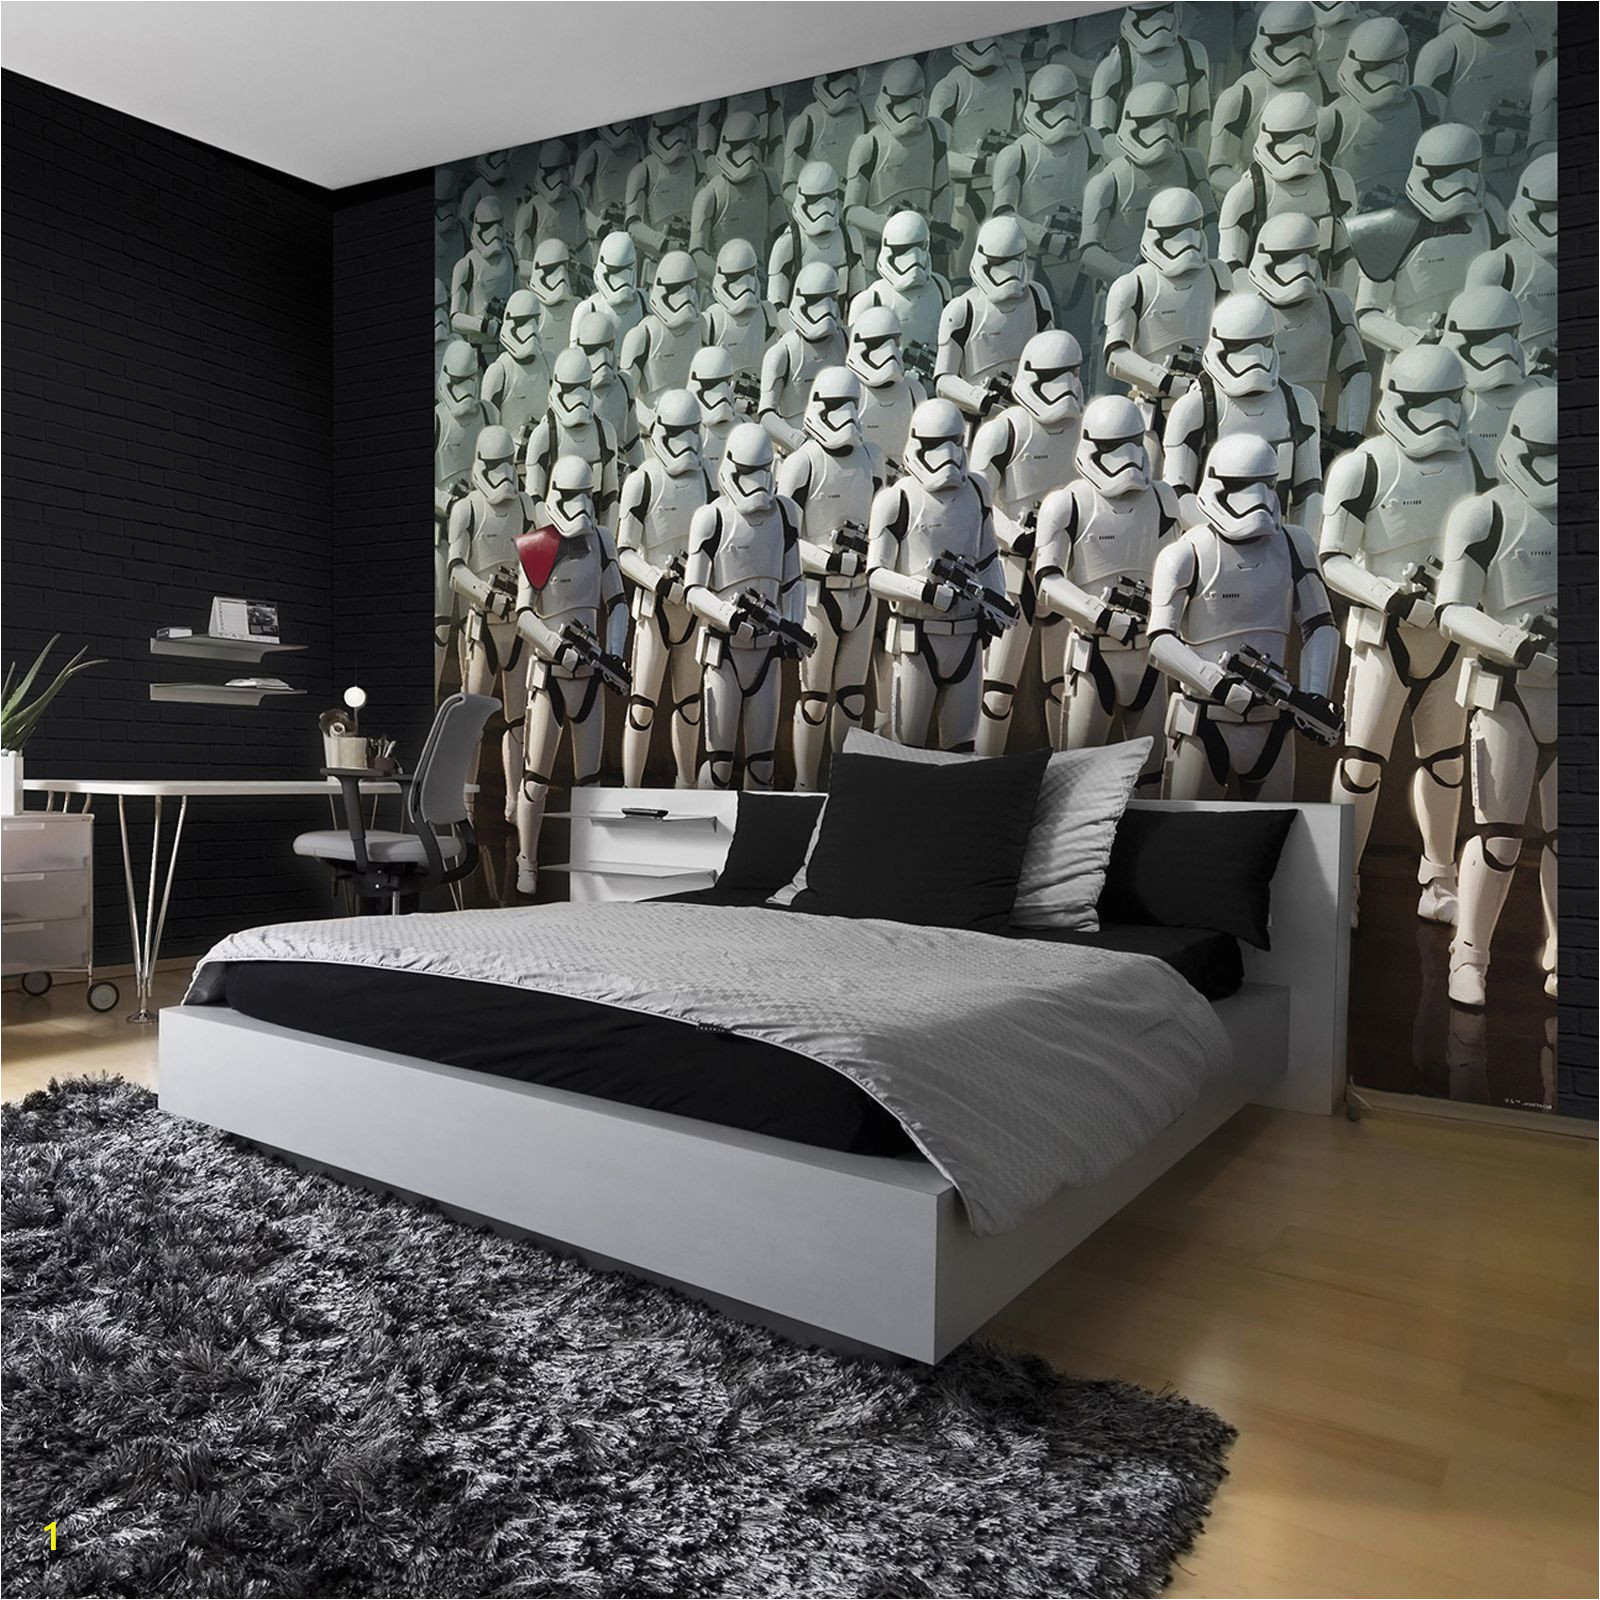 Create Your Own Wall Mural Uk Star Wars Stormtrooper Wall Mural Dream Bedroom …